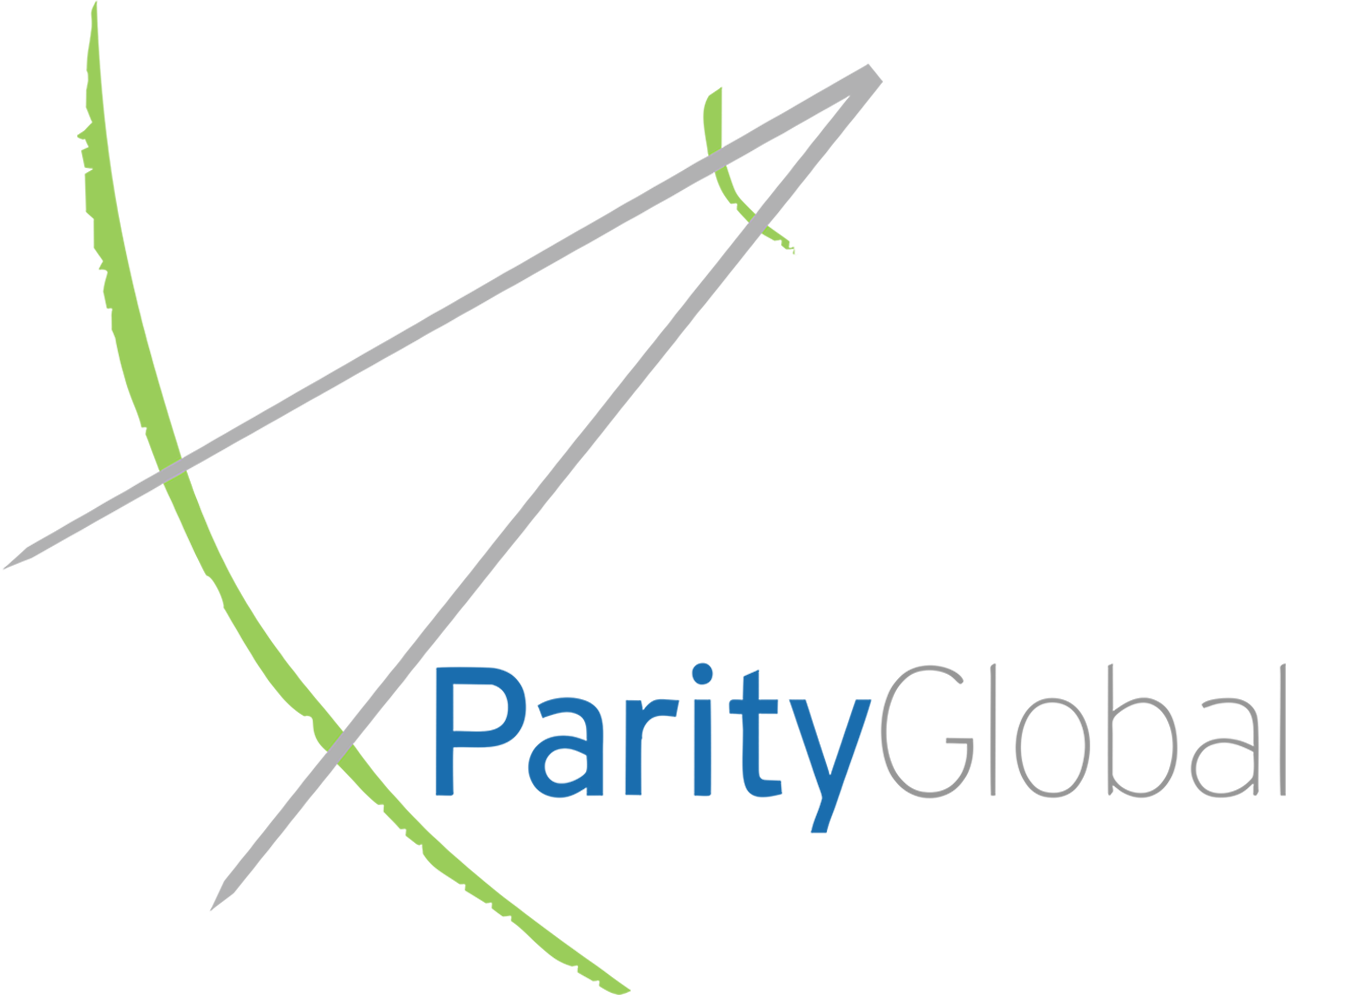 Parity Global